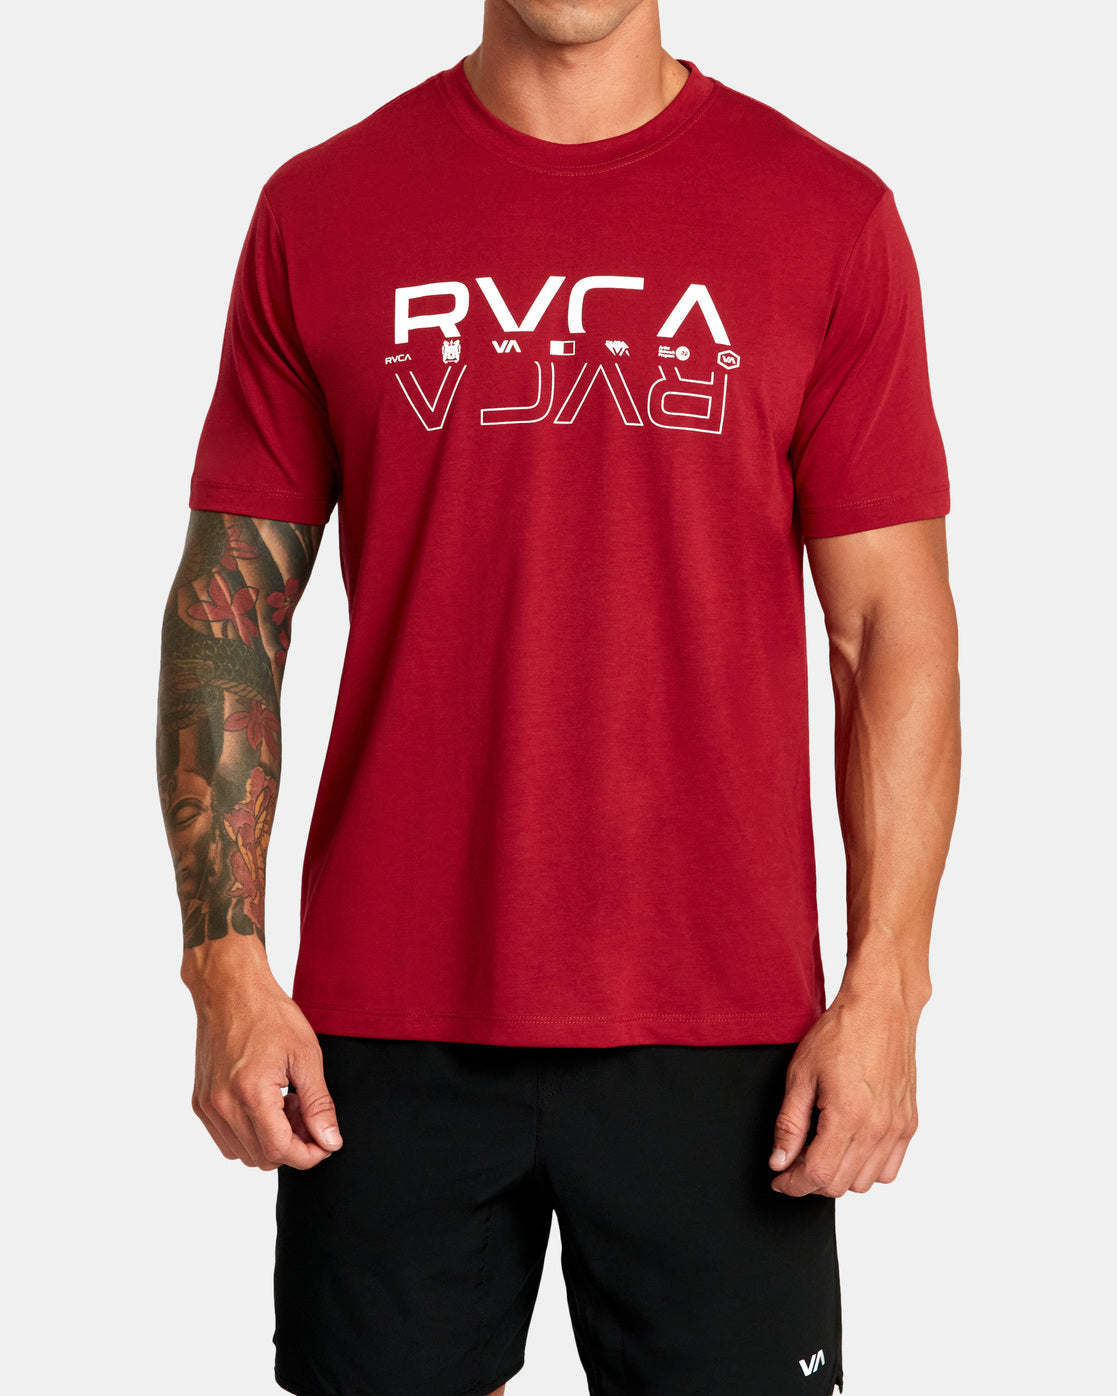 RVCA Double RVCA Split Workout S/S Tee